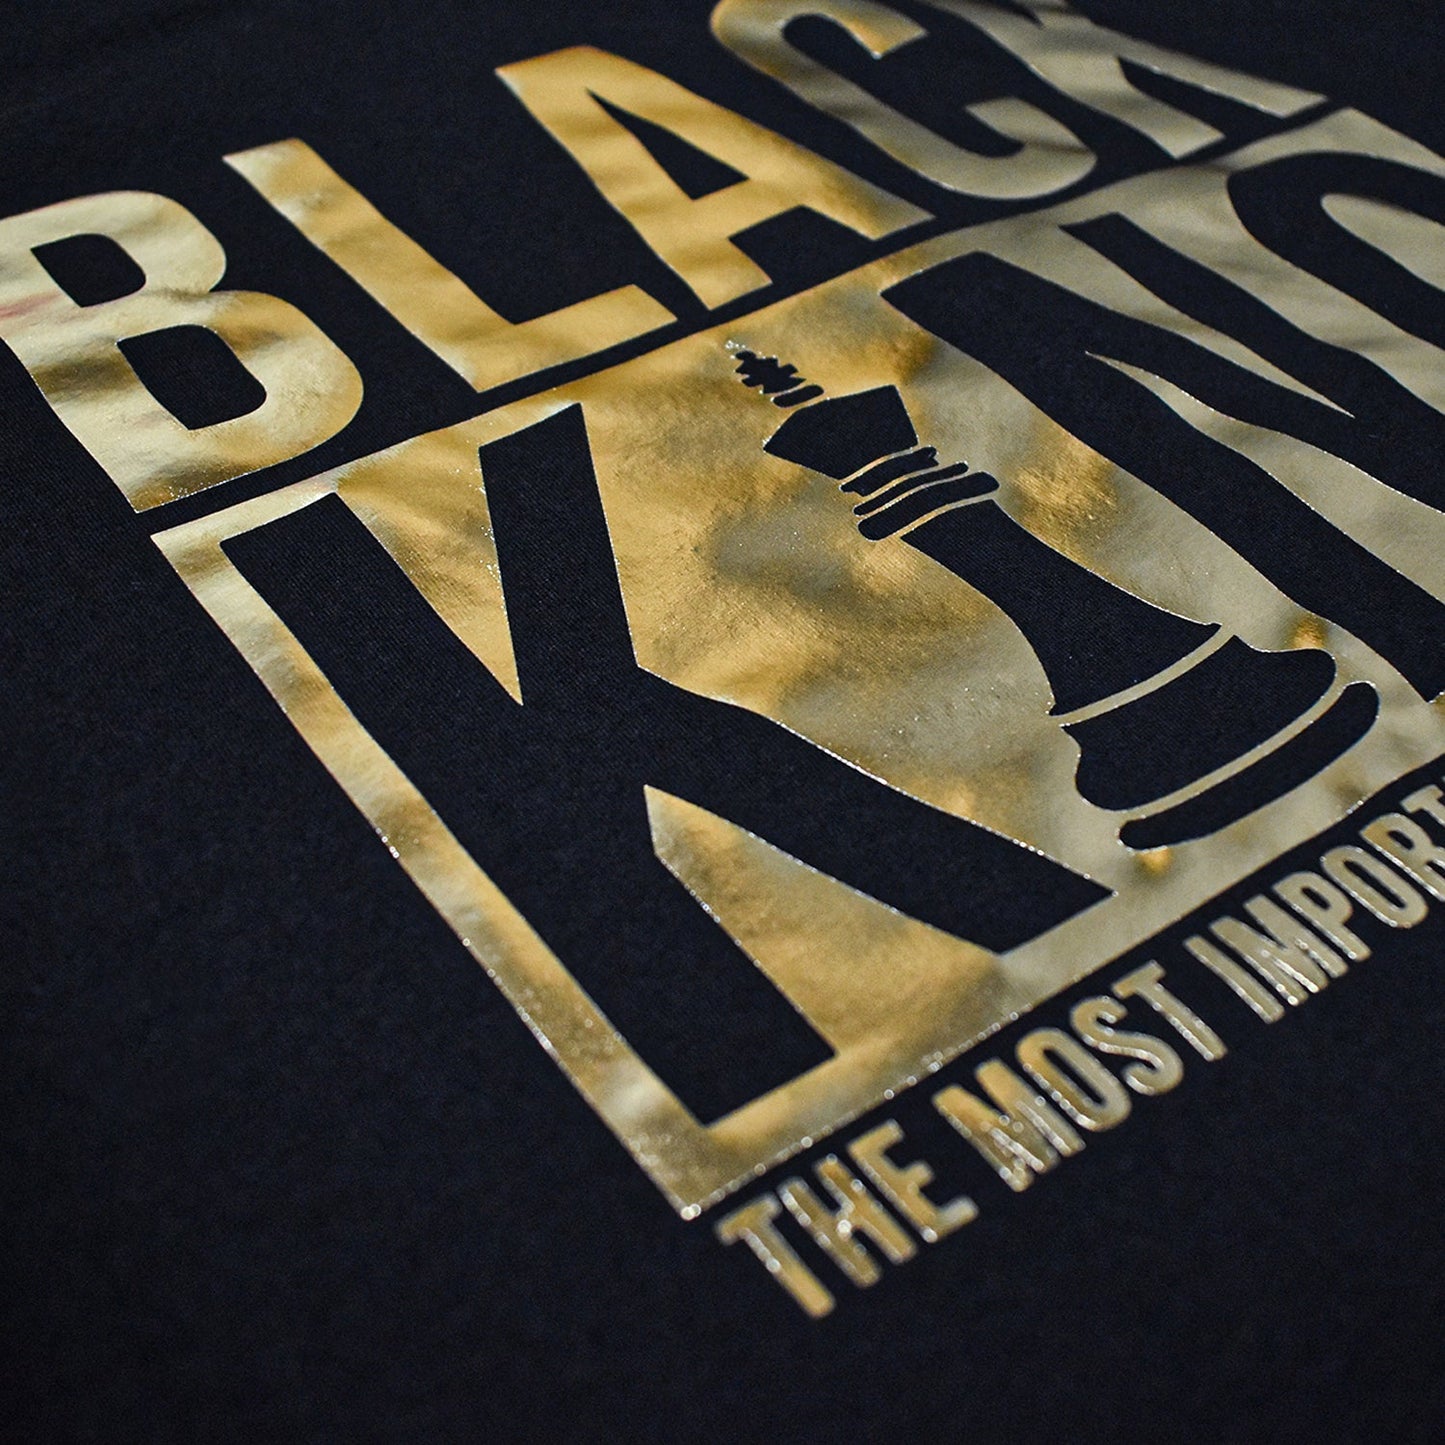 Black King T-Shirt